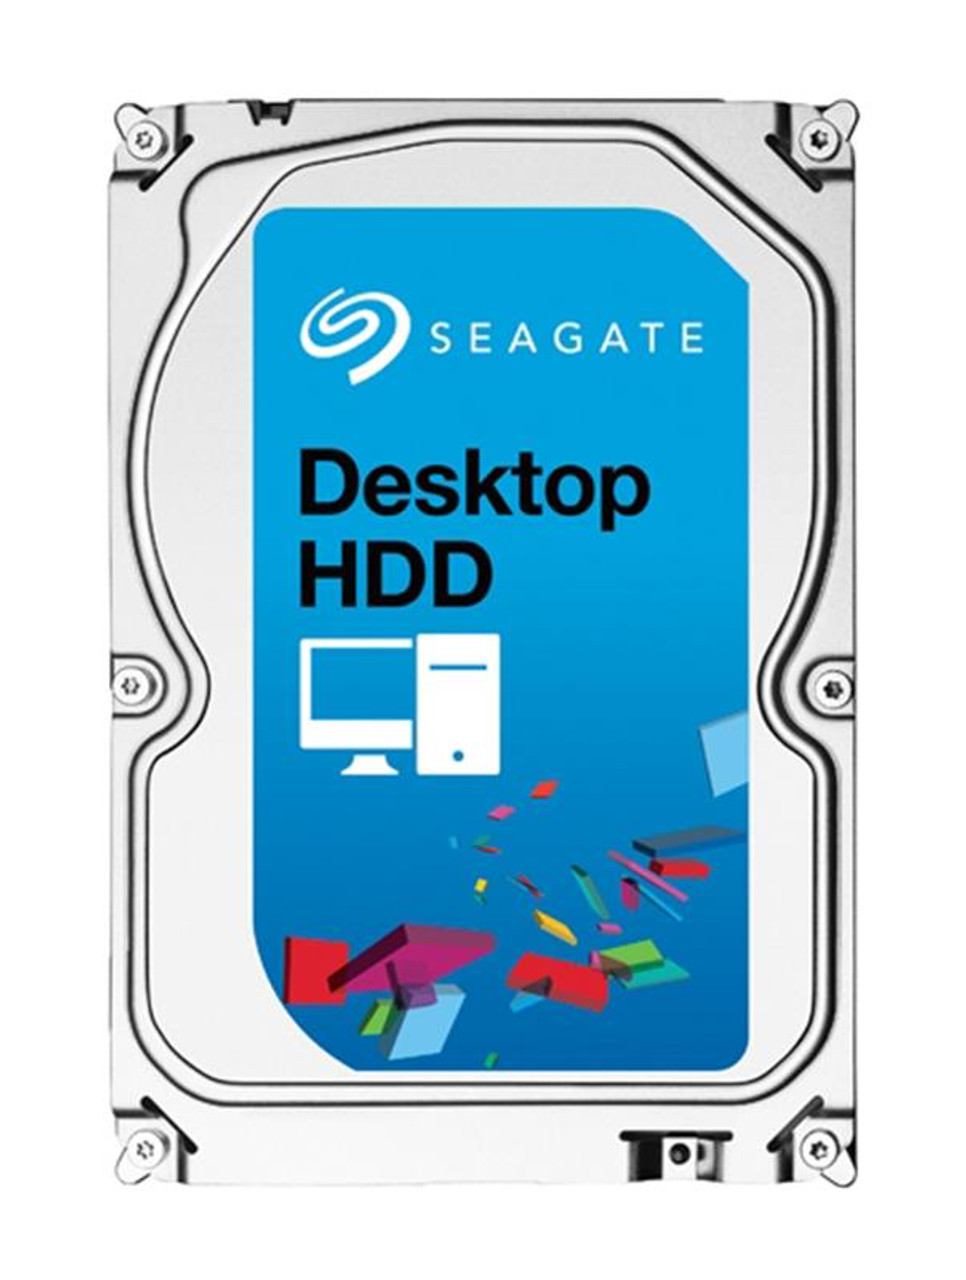 ST8000DM001 Seagate Desktop HDD 8TB 7200RPM SATA 6Gbps 128MB Cache